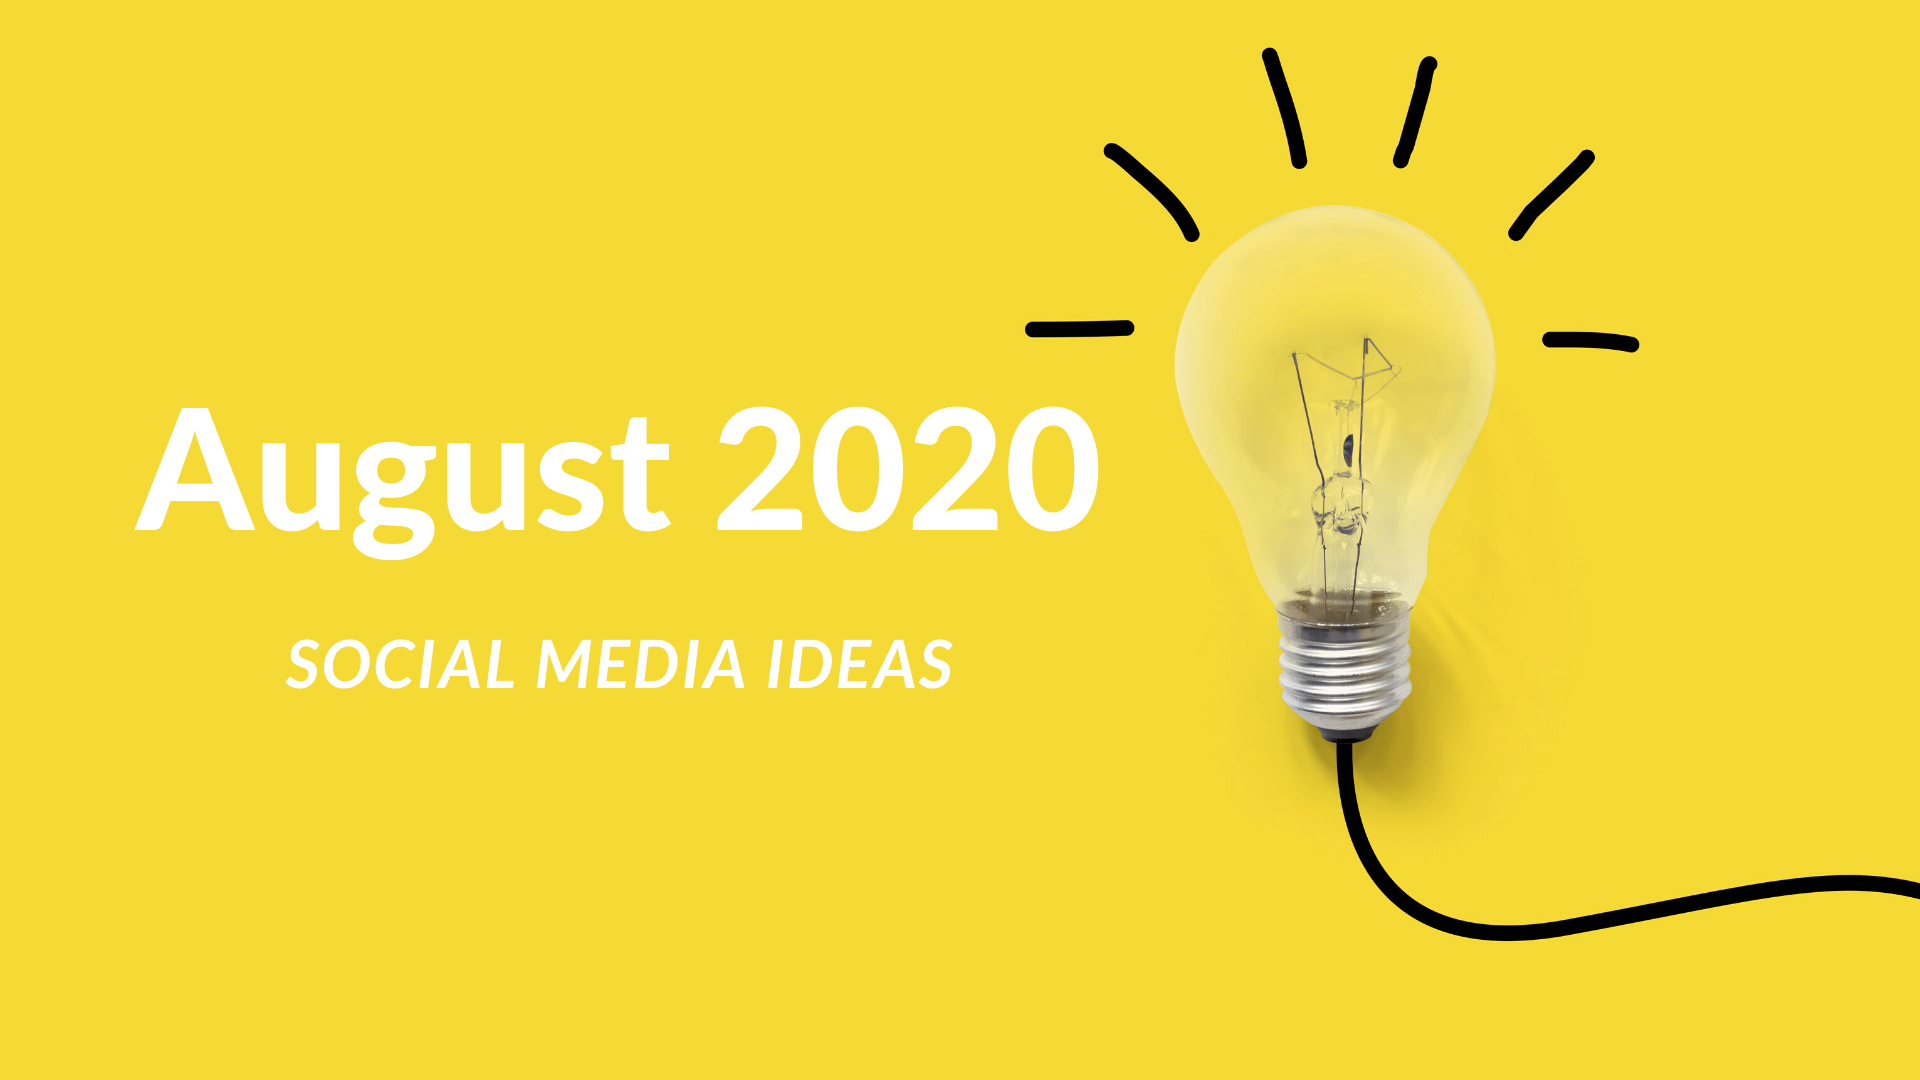 Socila media ideas for August